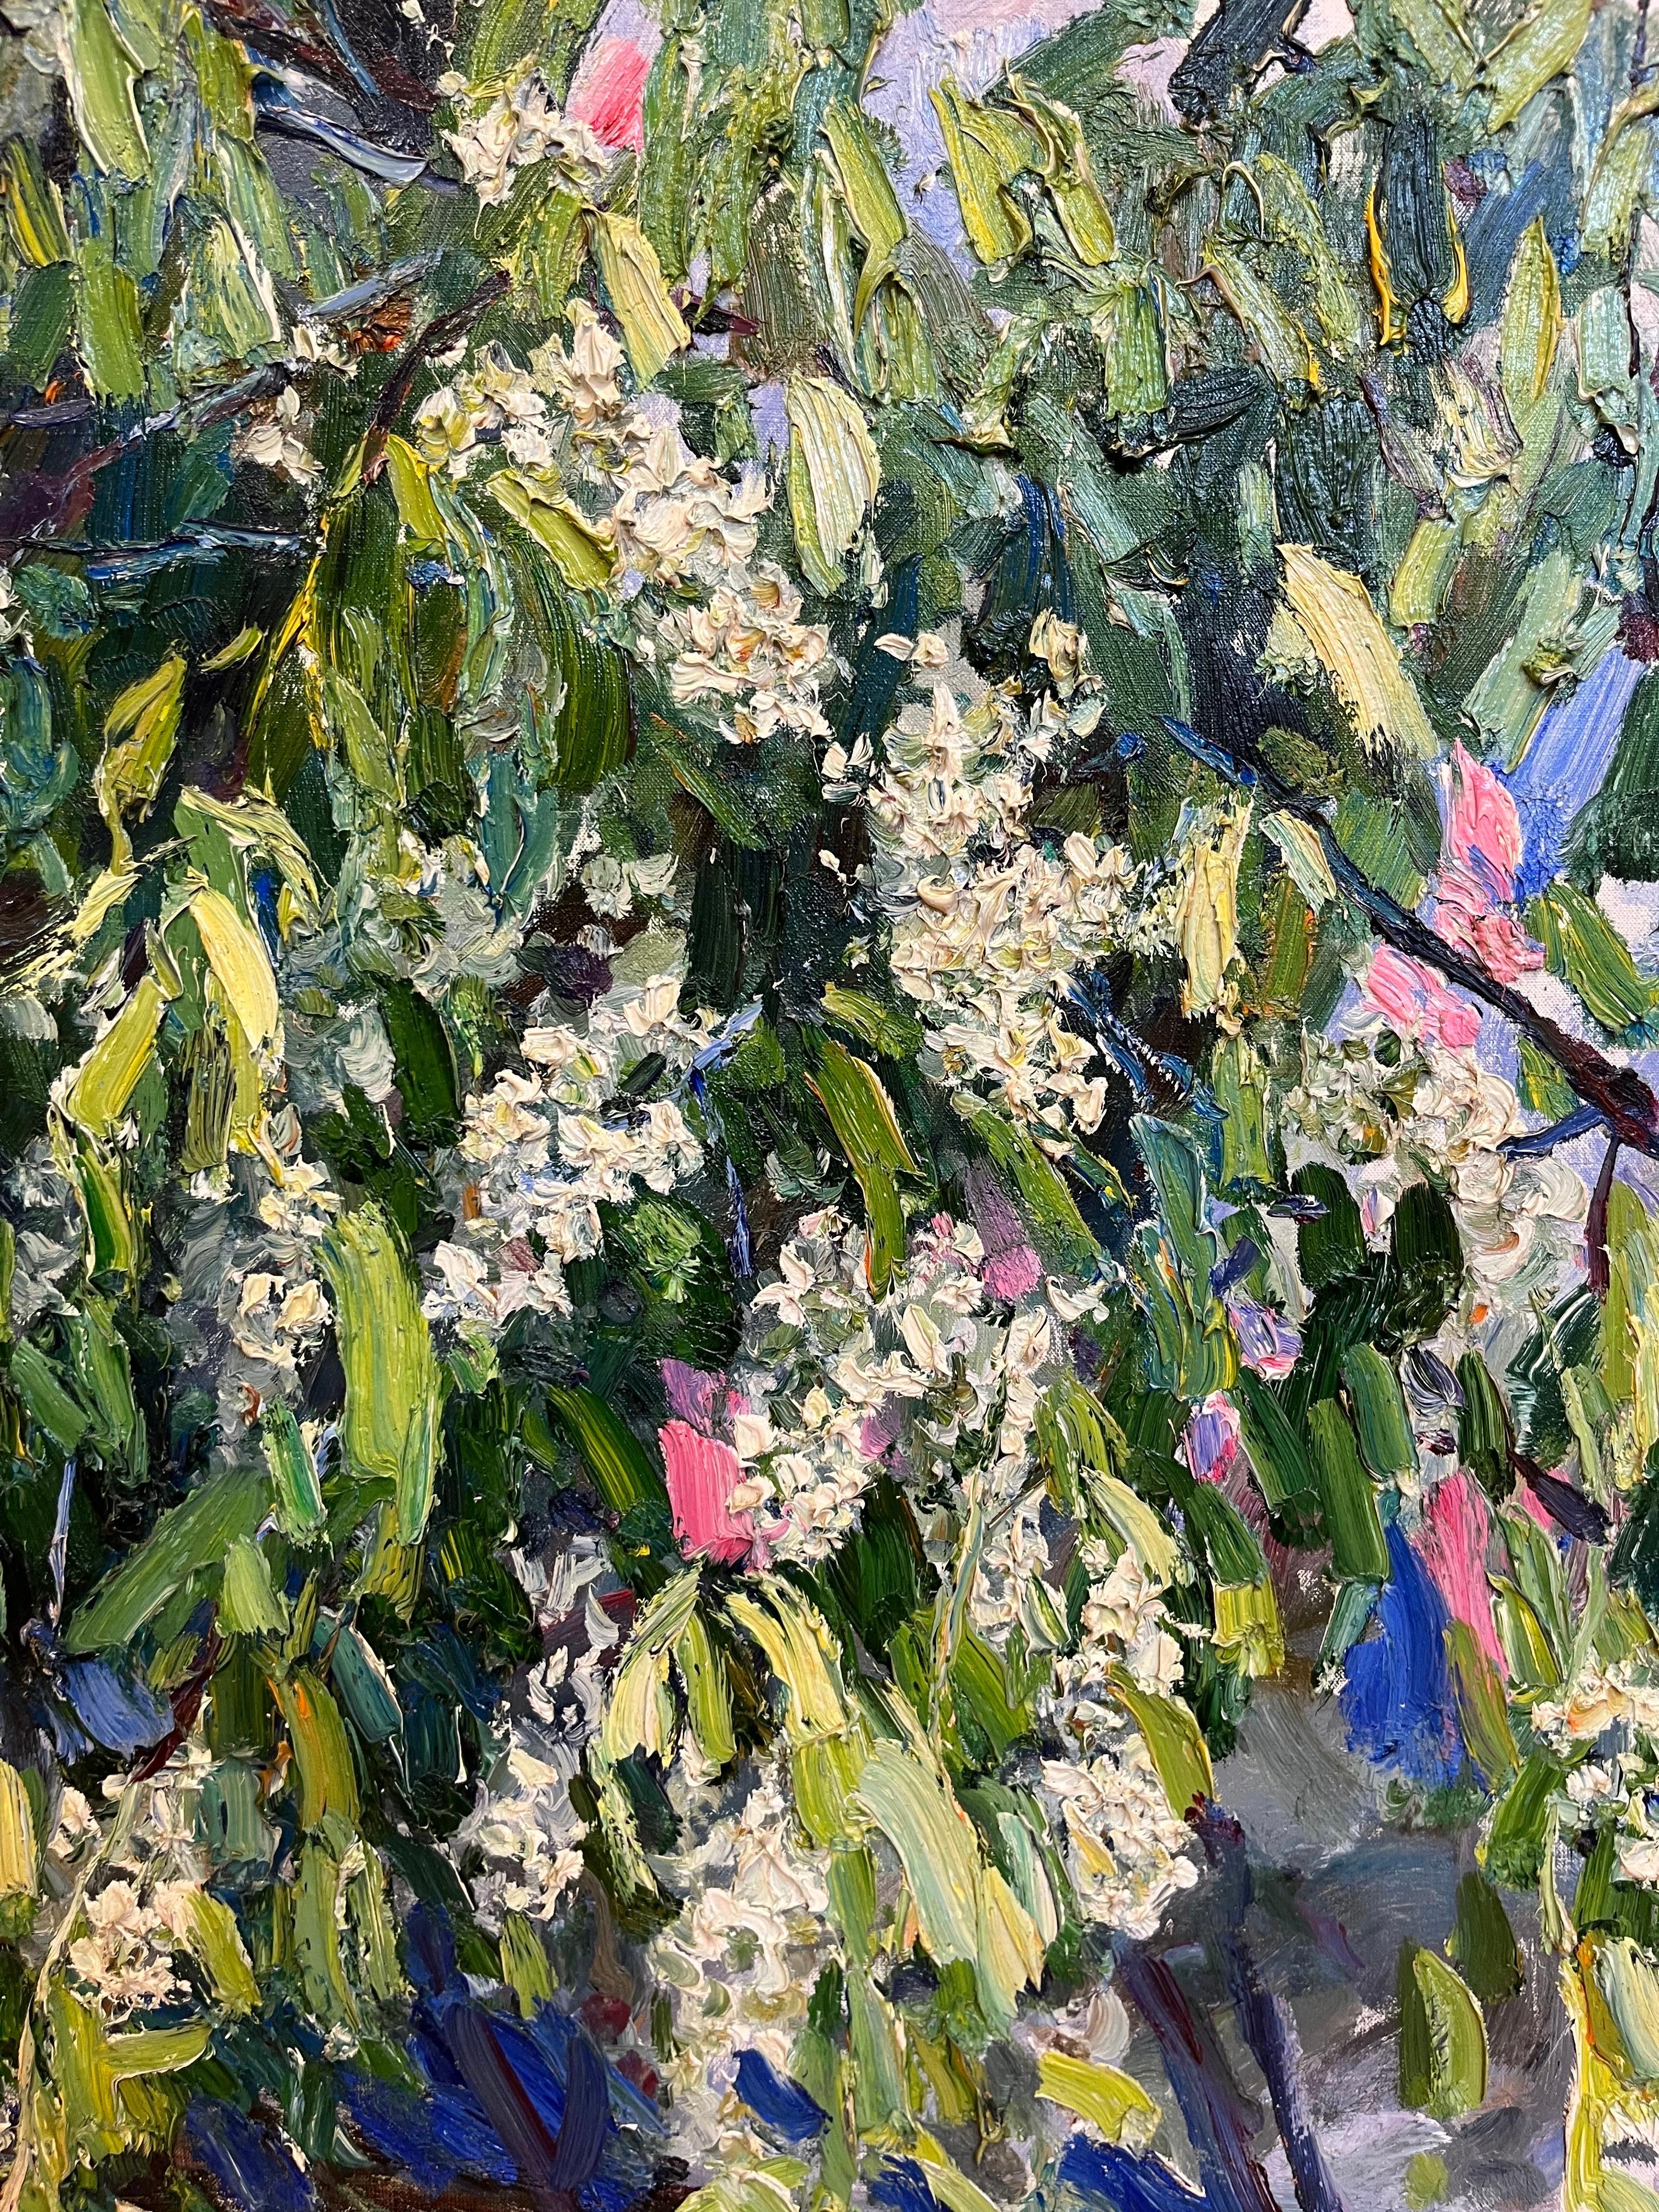 Fiori di ciliegio cm. 100 x 88  1997 - Post-impressionnisme Painting par Georgij Moroz